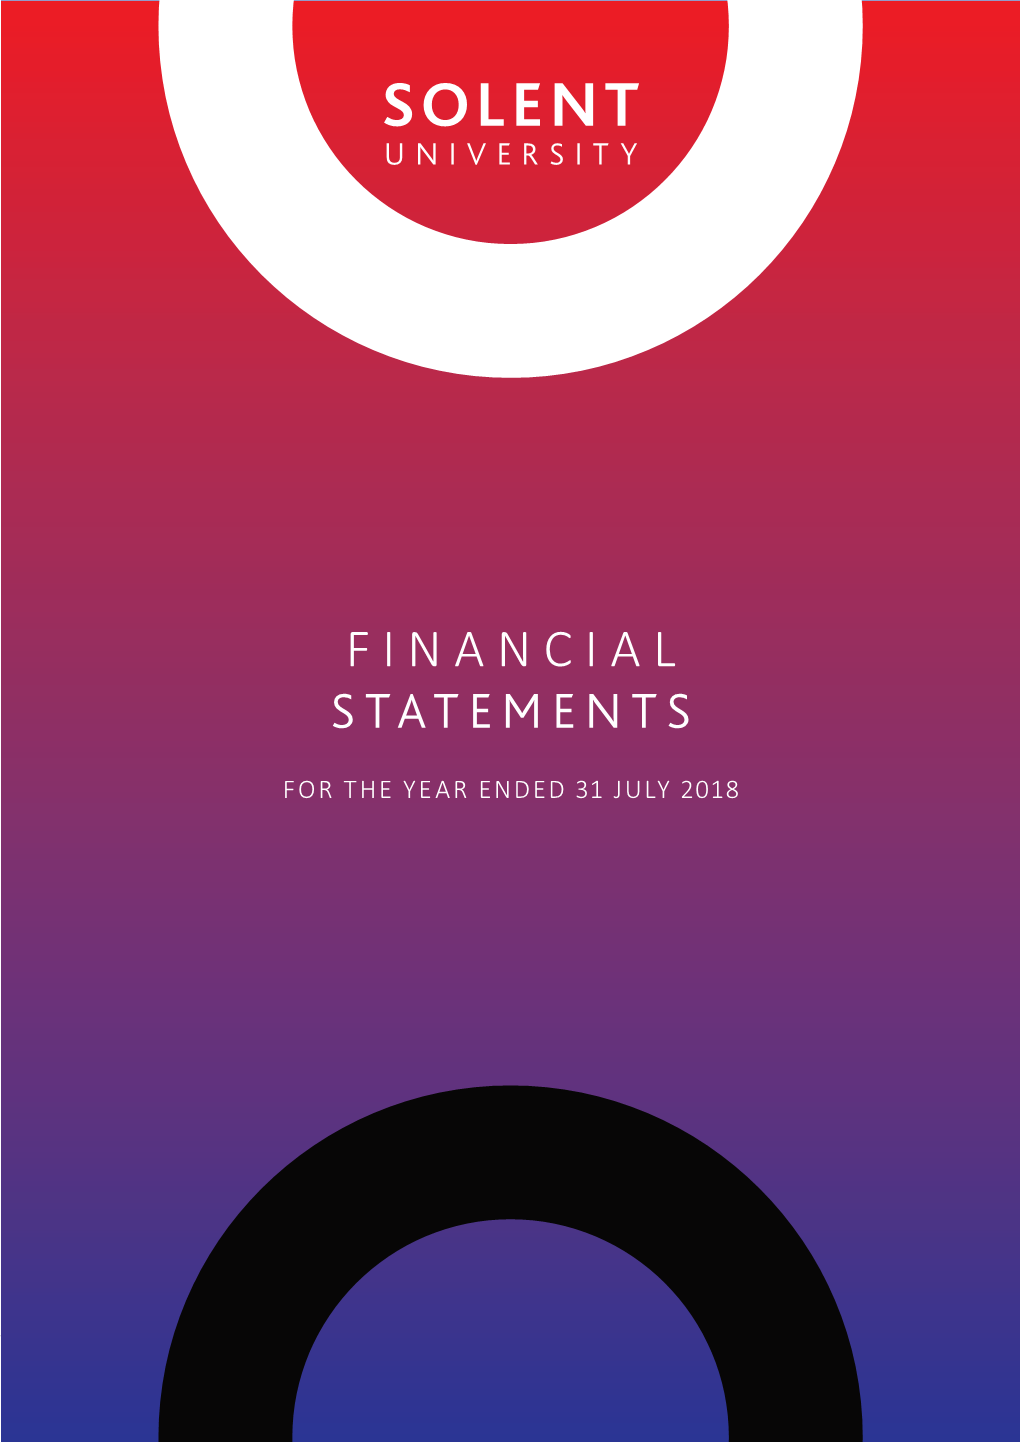 Financial Statements 2017/18